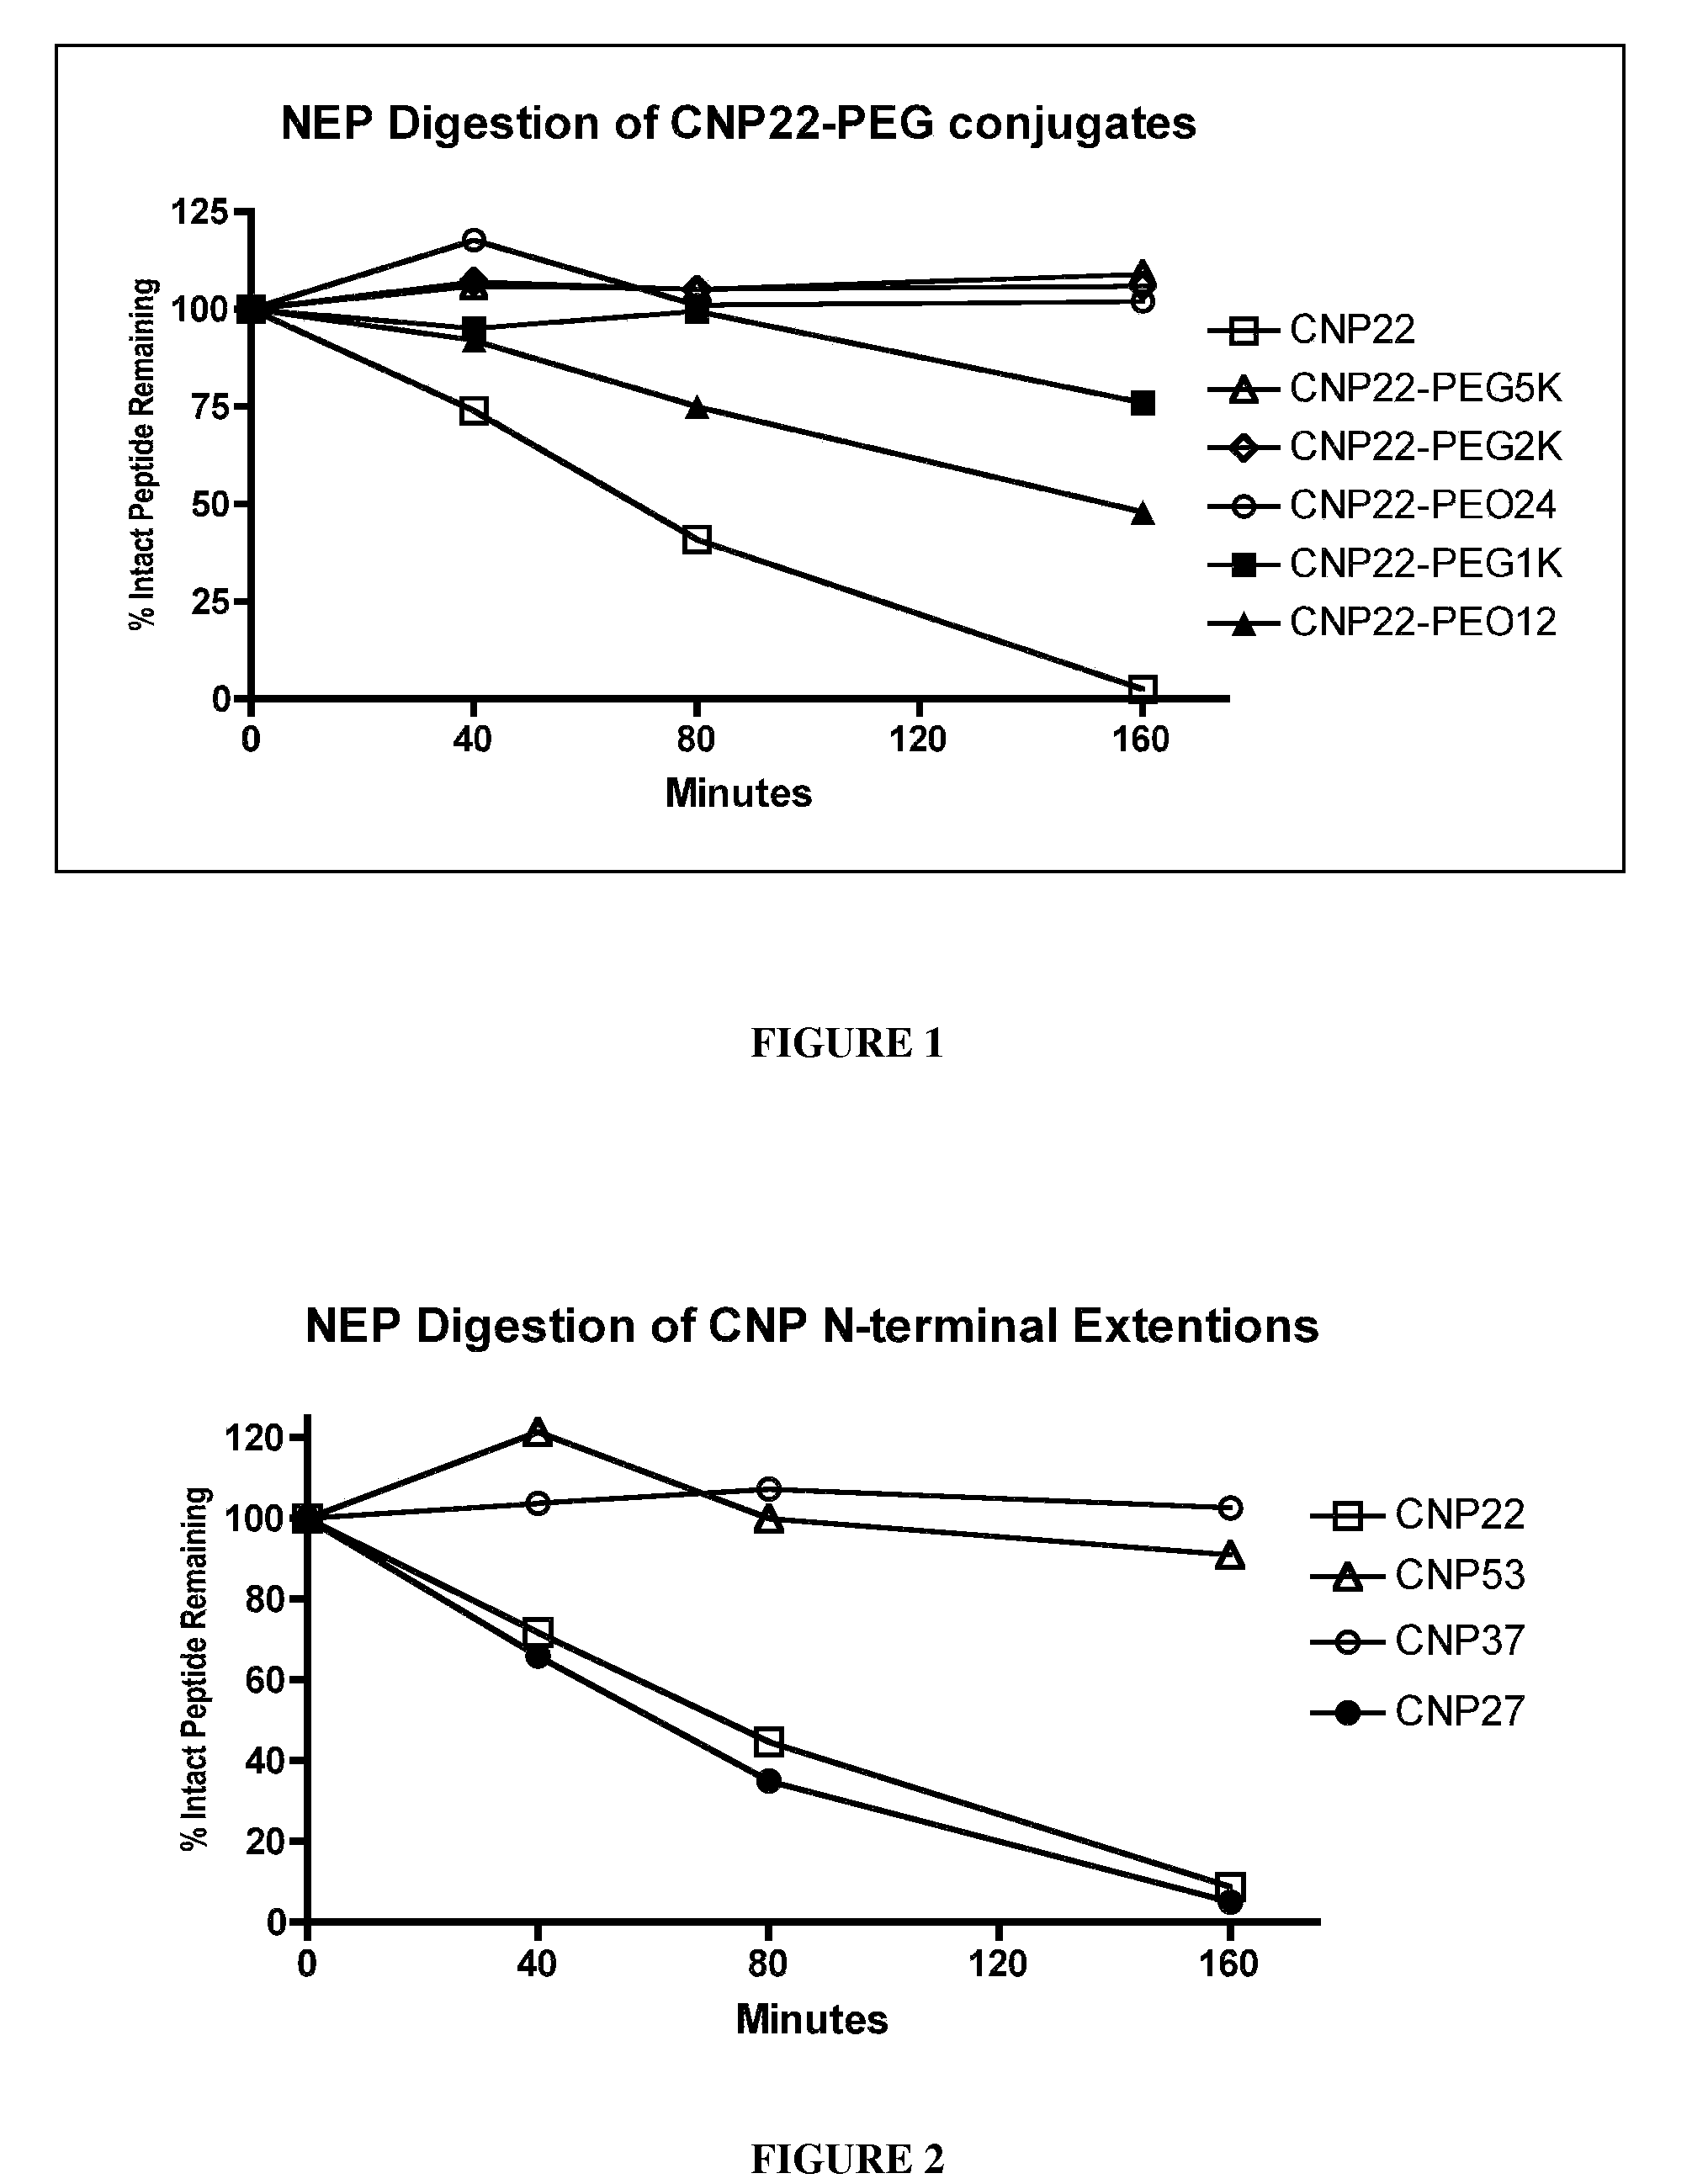 Variants of C-type natriuretic peptides